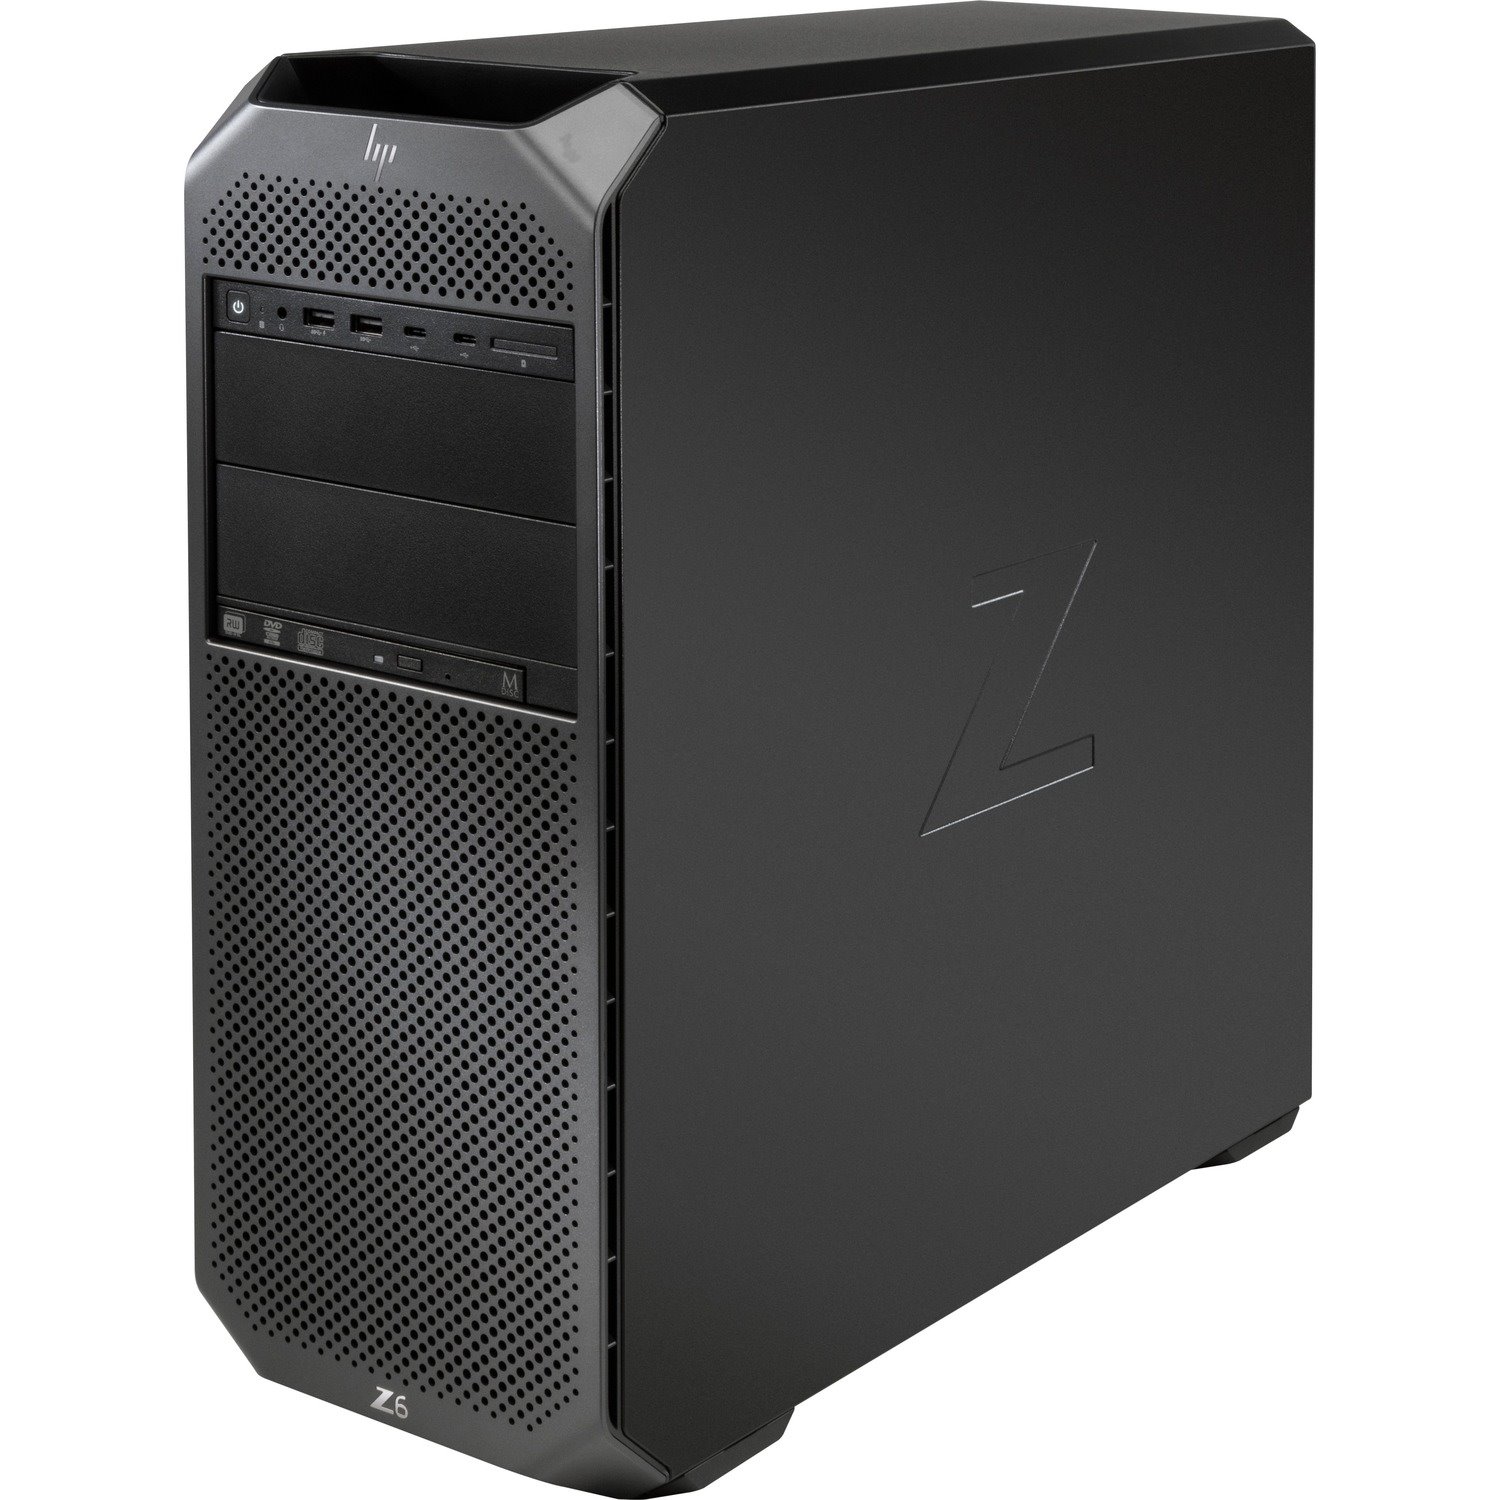 HP Z6 G4 Workstation - Intel Xeon Silver 4216 - 16 GB - 512 GB SSD - Tower - Black